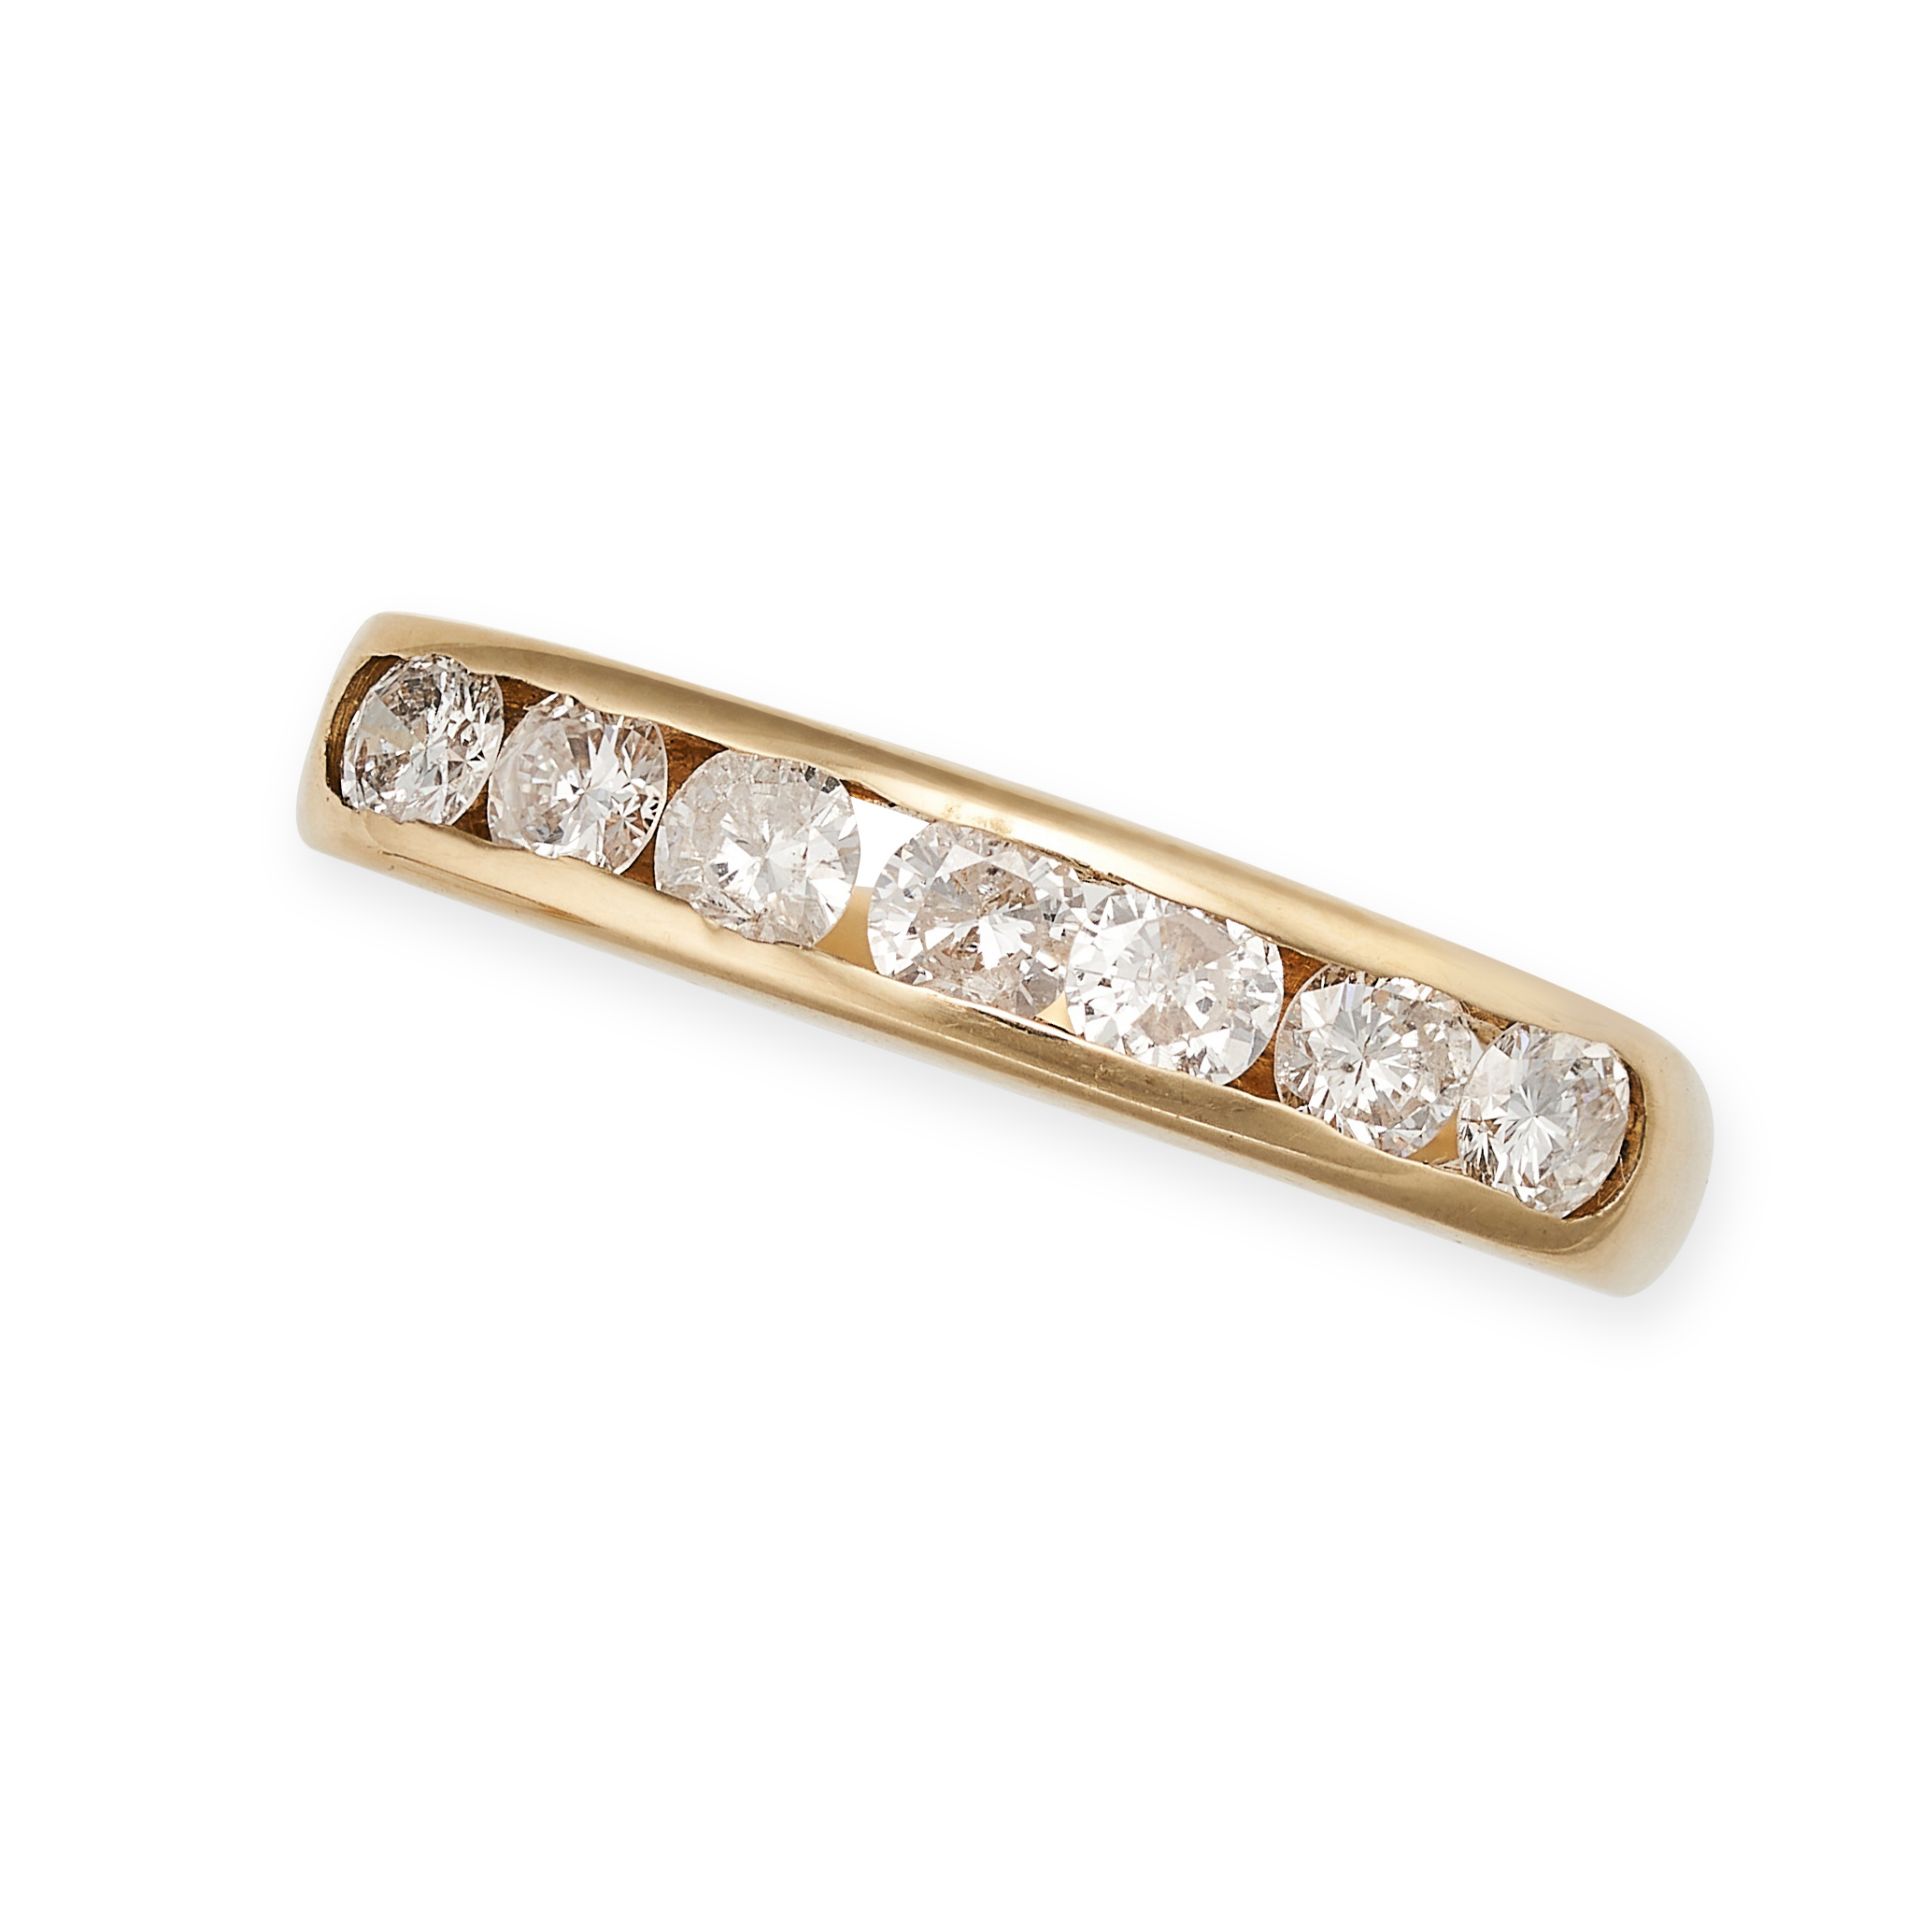 A DIAMOND HALF ETERNITY RING in 18ct yellow gold, set with seven round brilliant cut diamonds, fu...